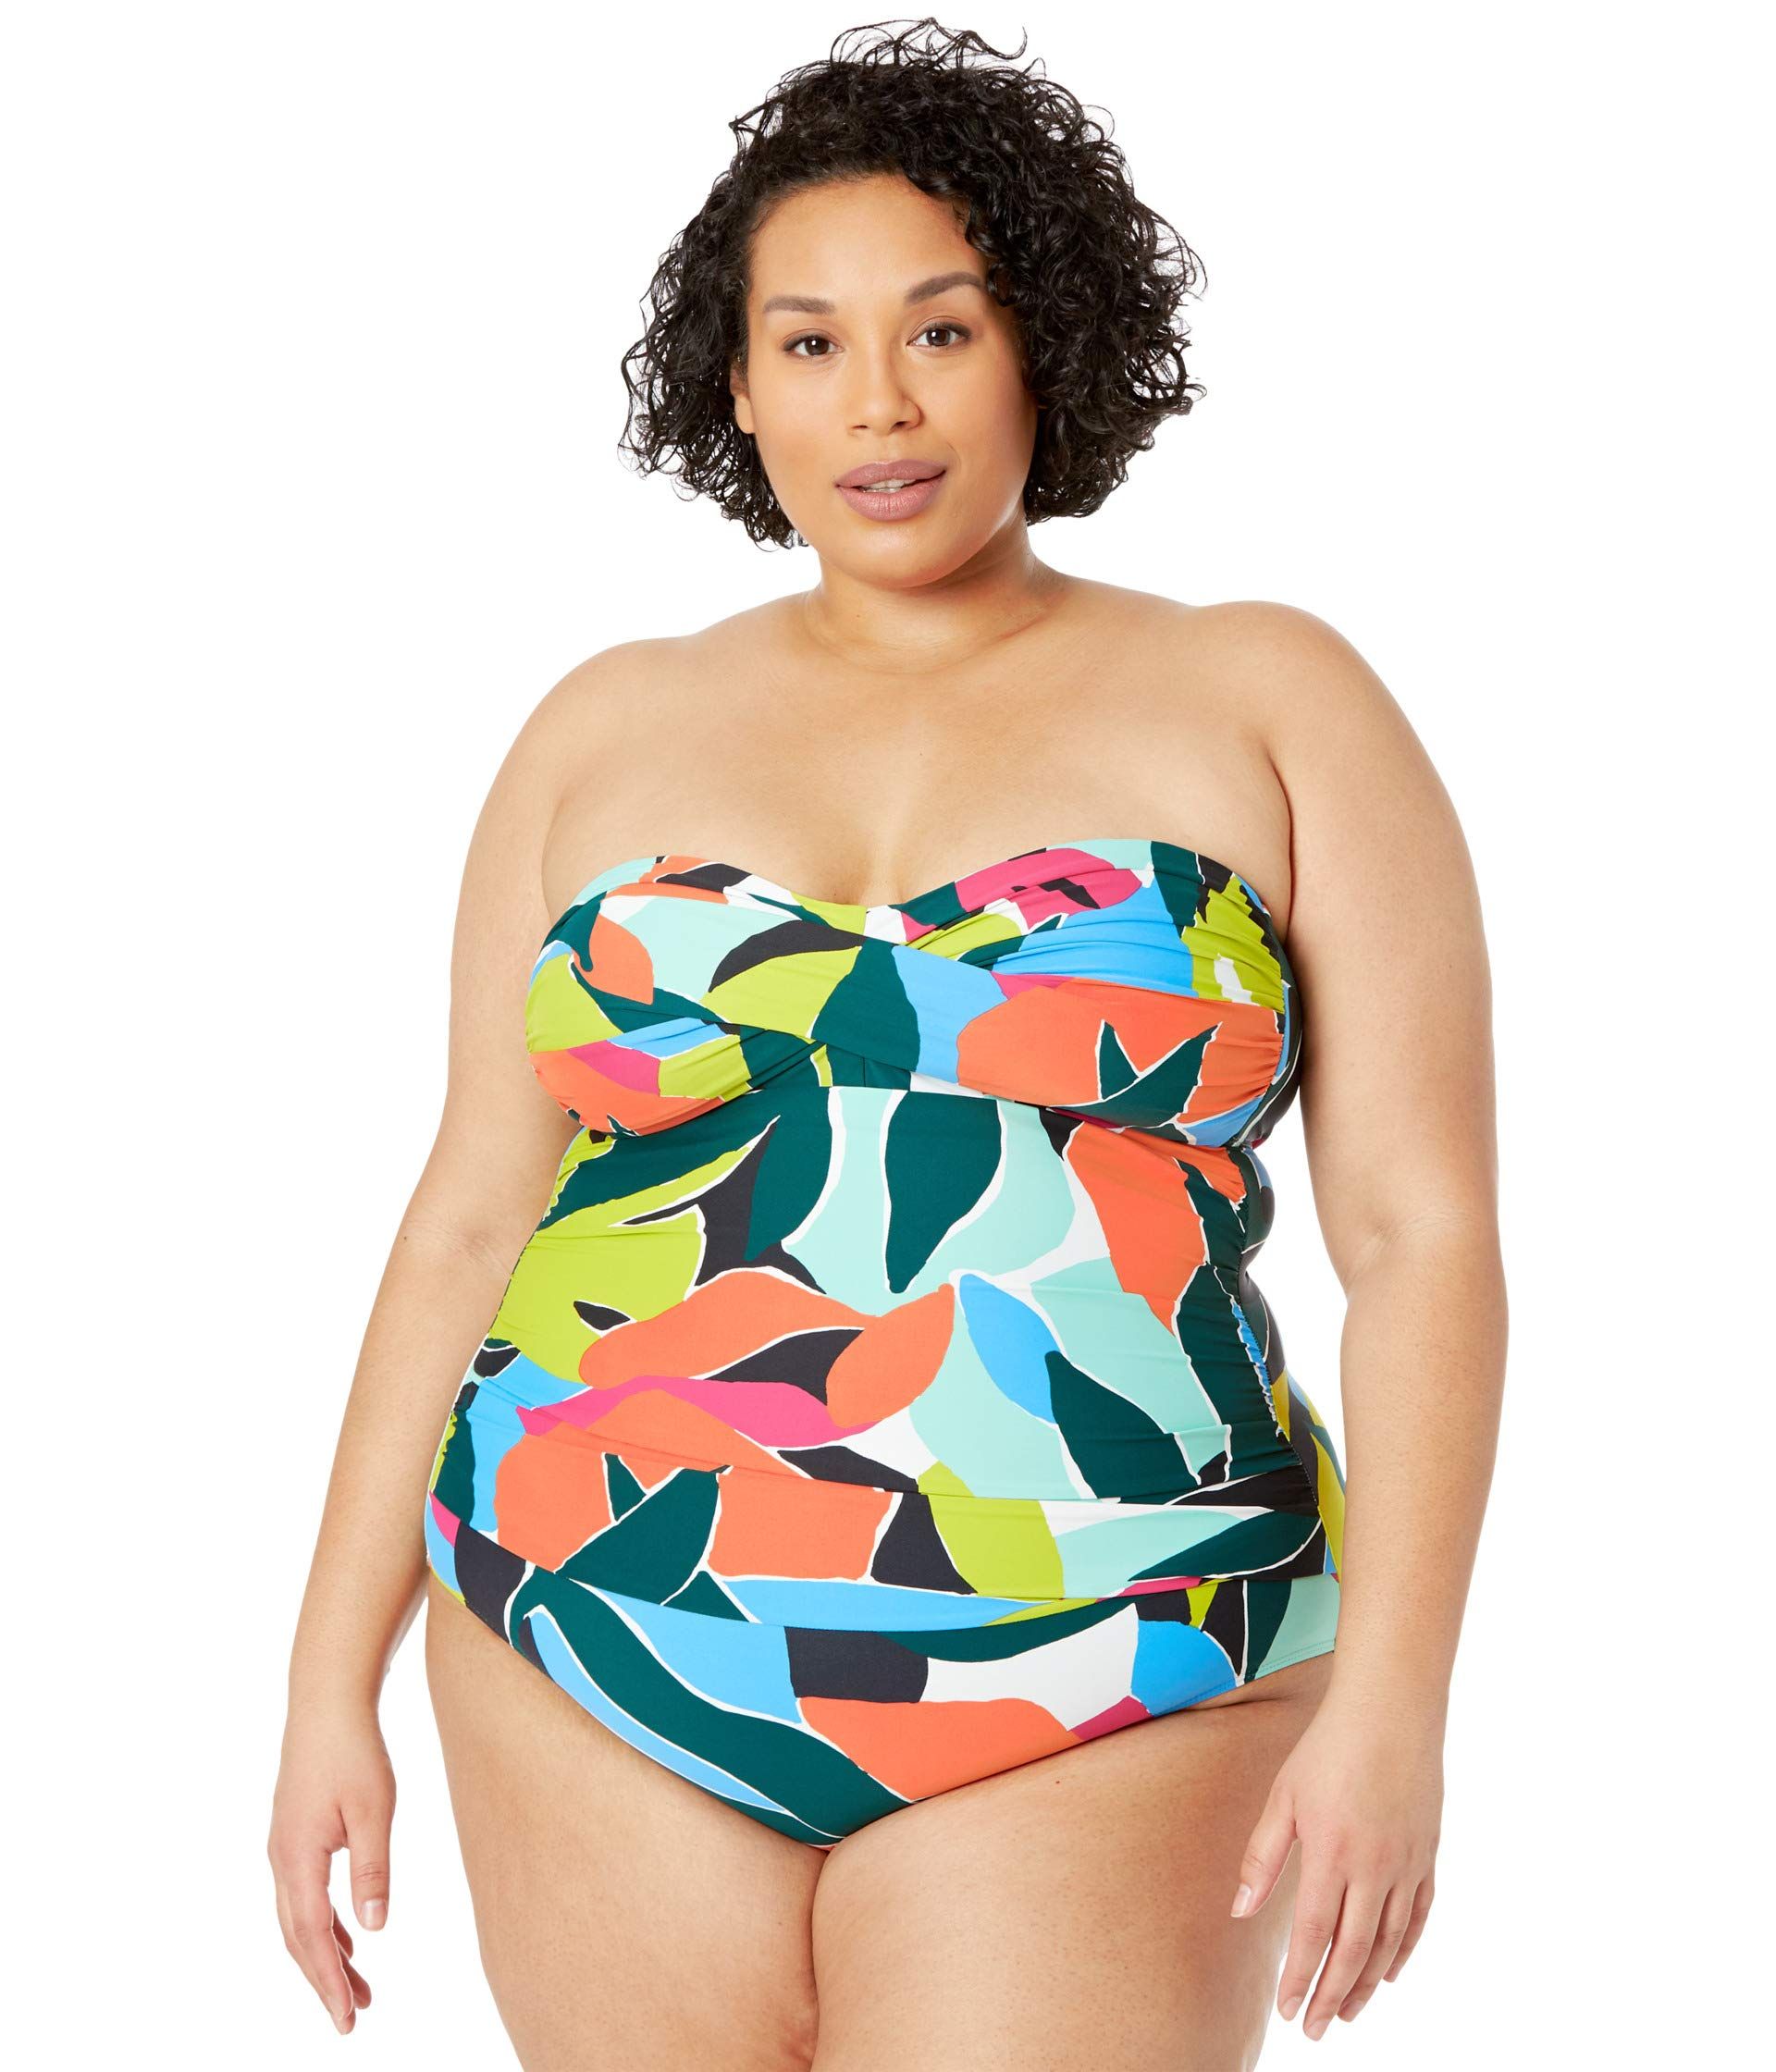 25 Best Plus-Size Suits - Cute Swimsuits For Curvy Women